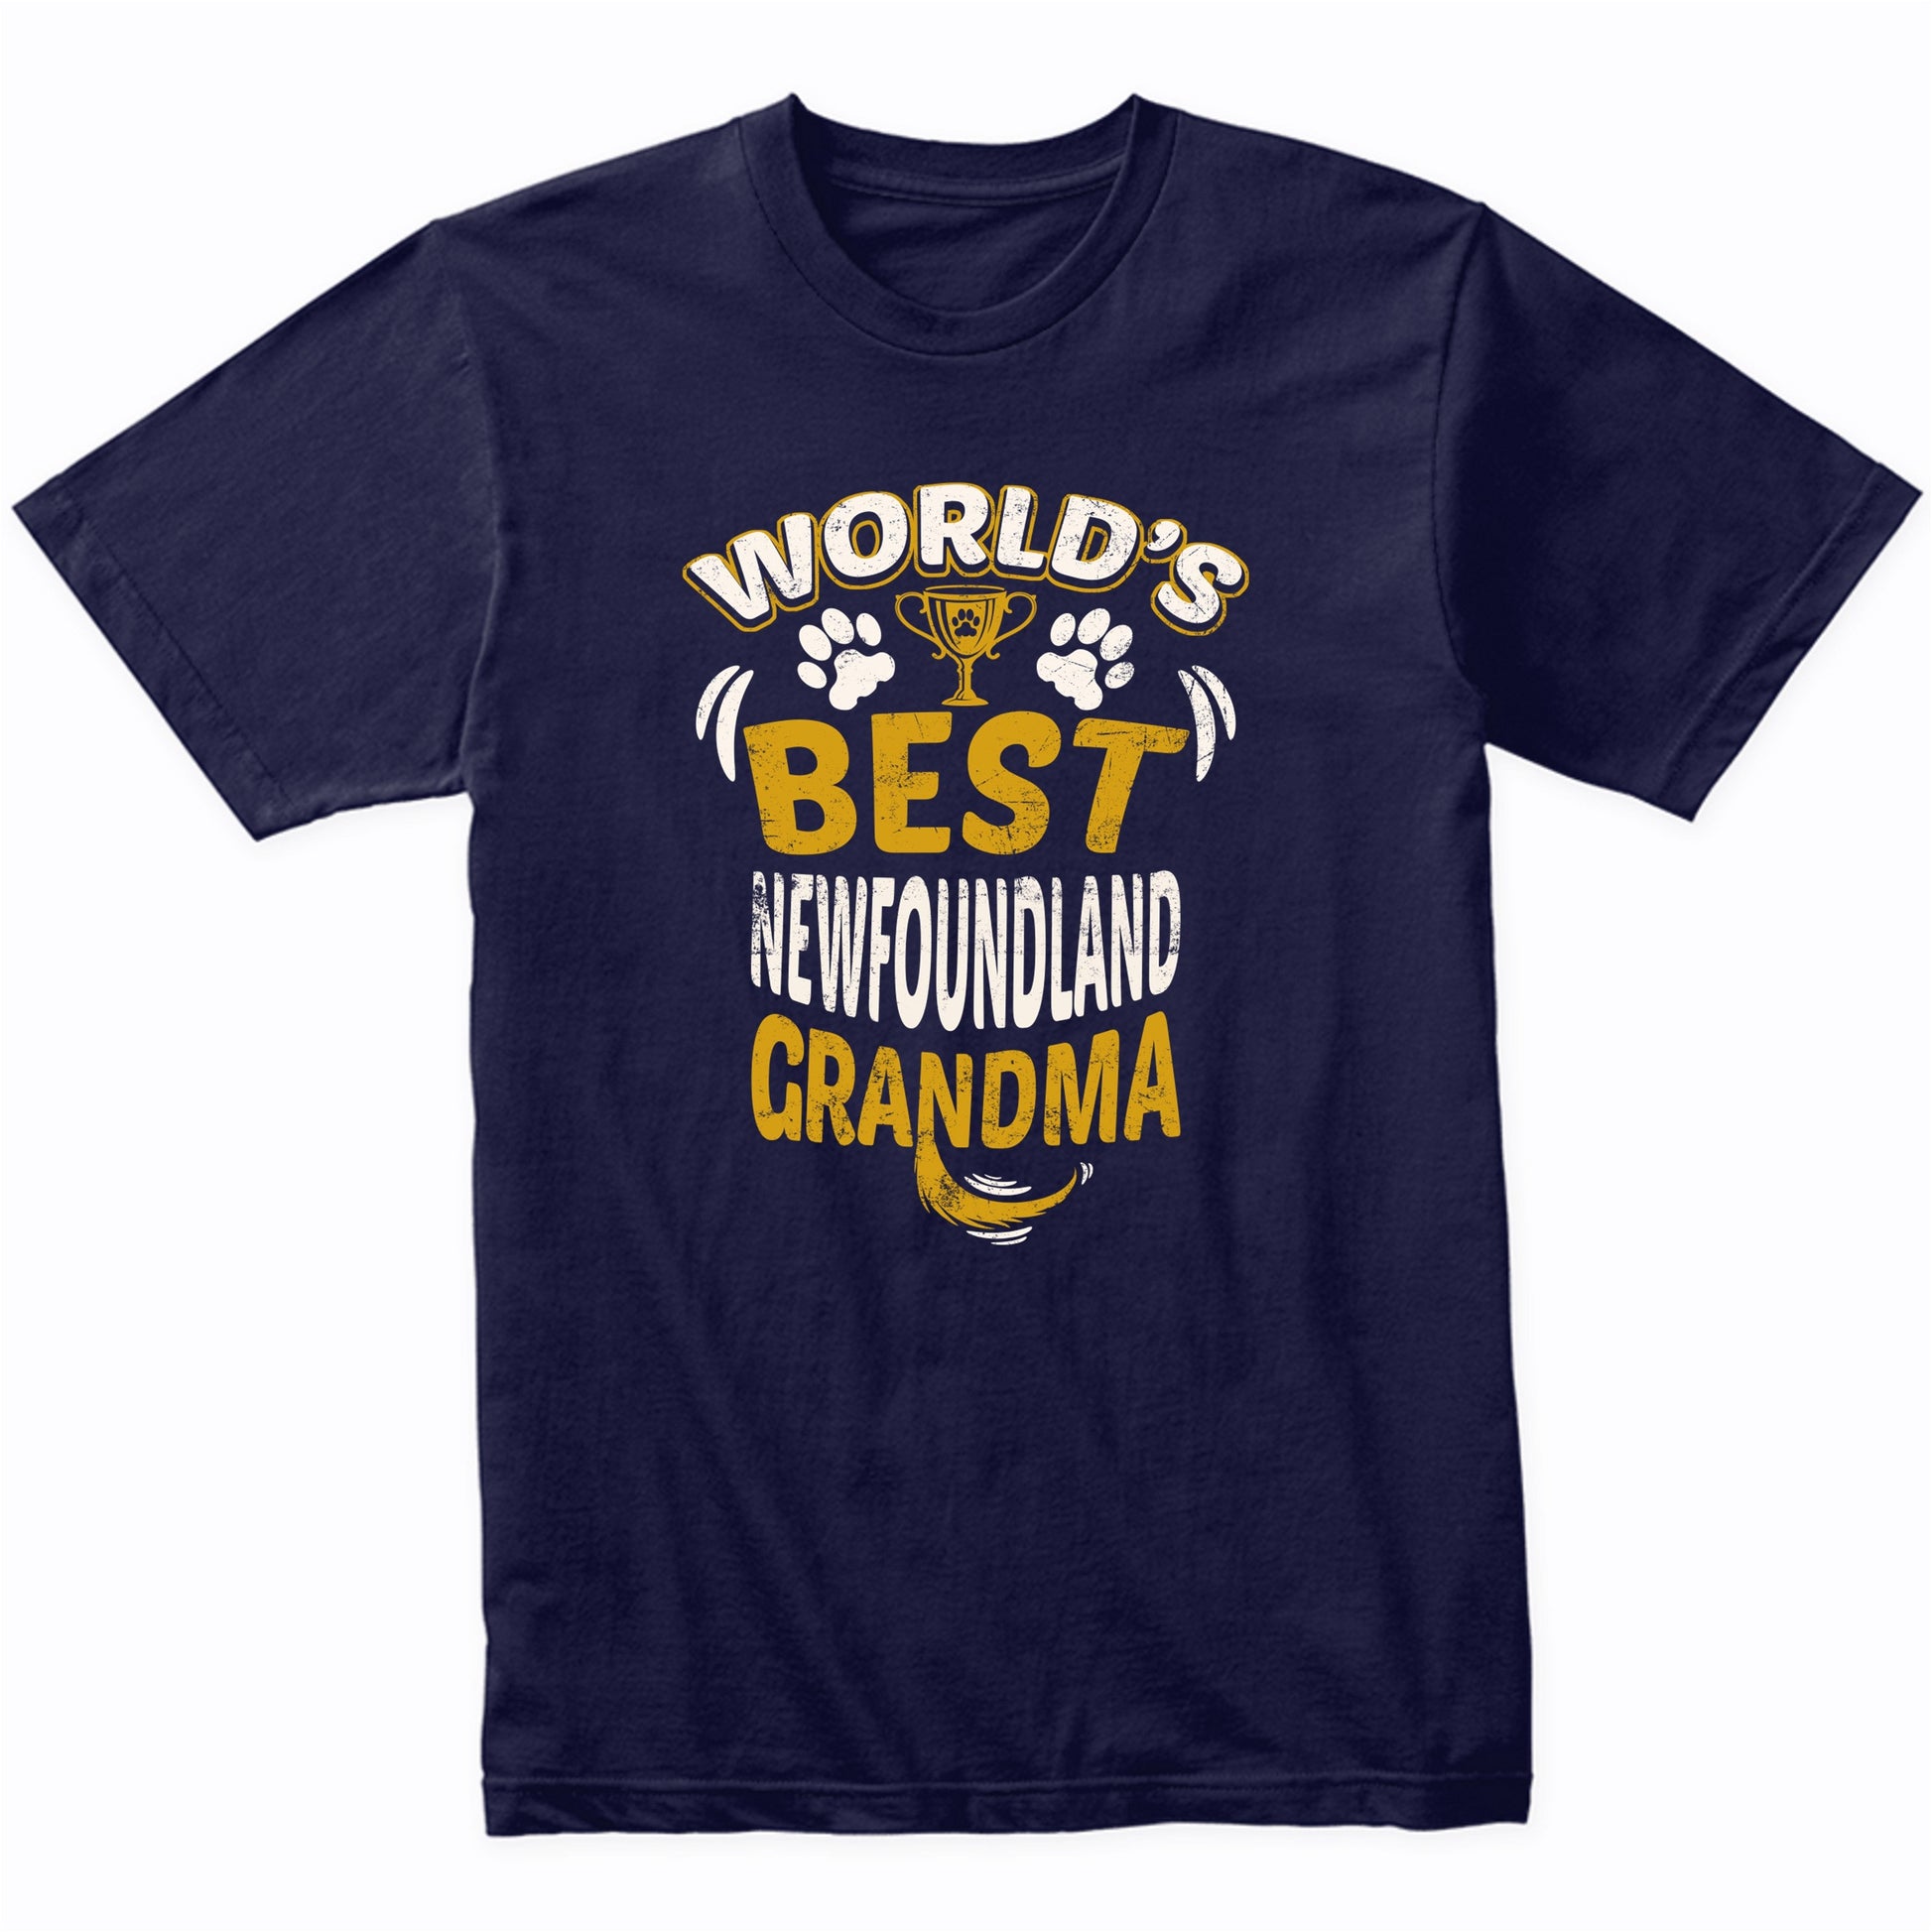 World's Best Newfoundland Grandma Graphic T-Shirt